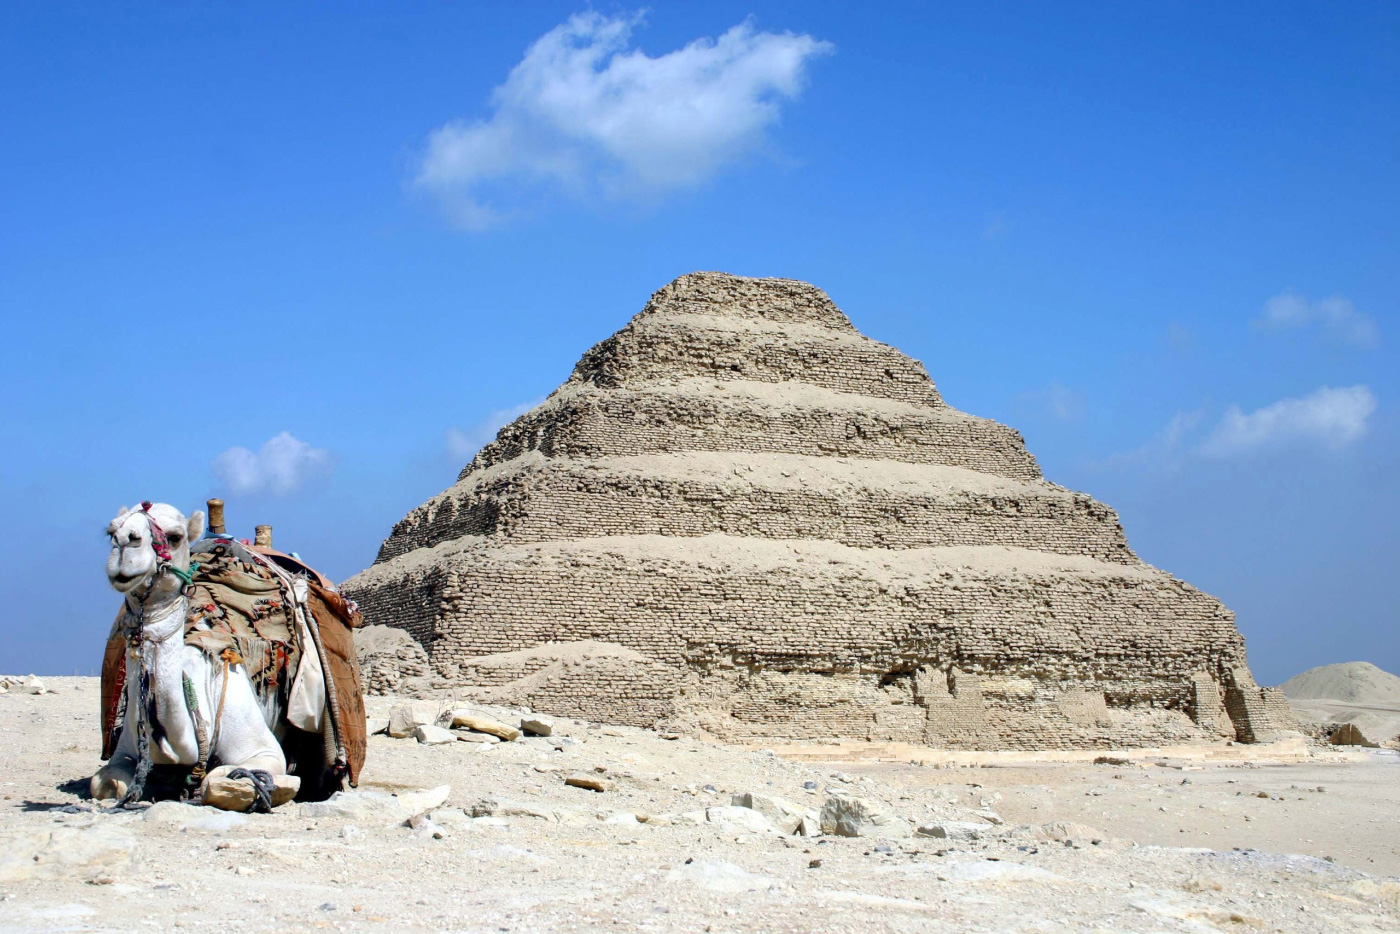 A camel next to a pyramid